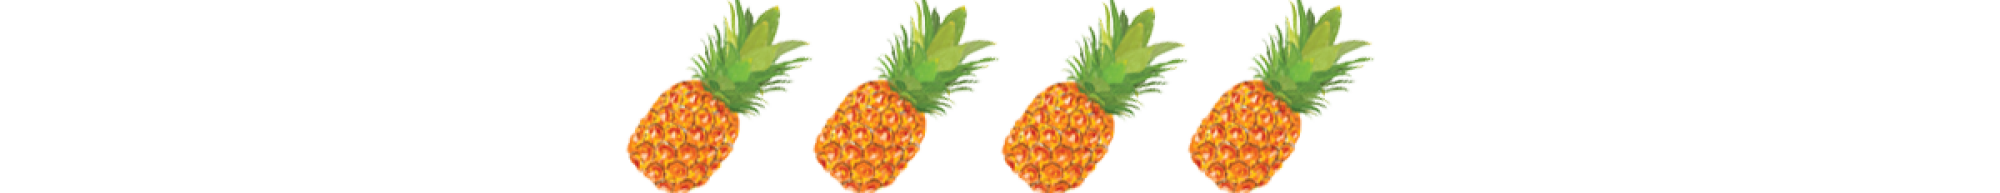 An illustration of pineapple